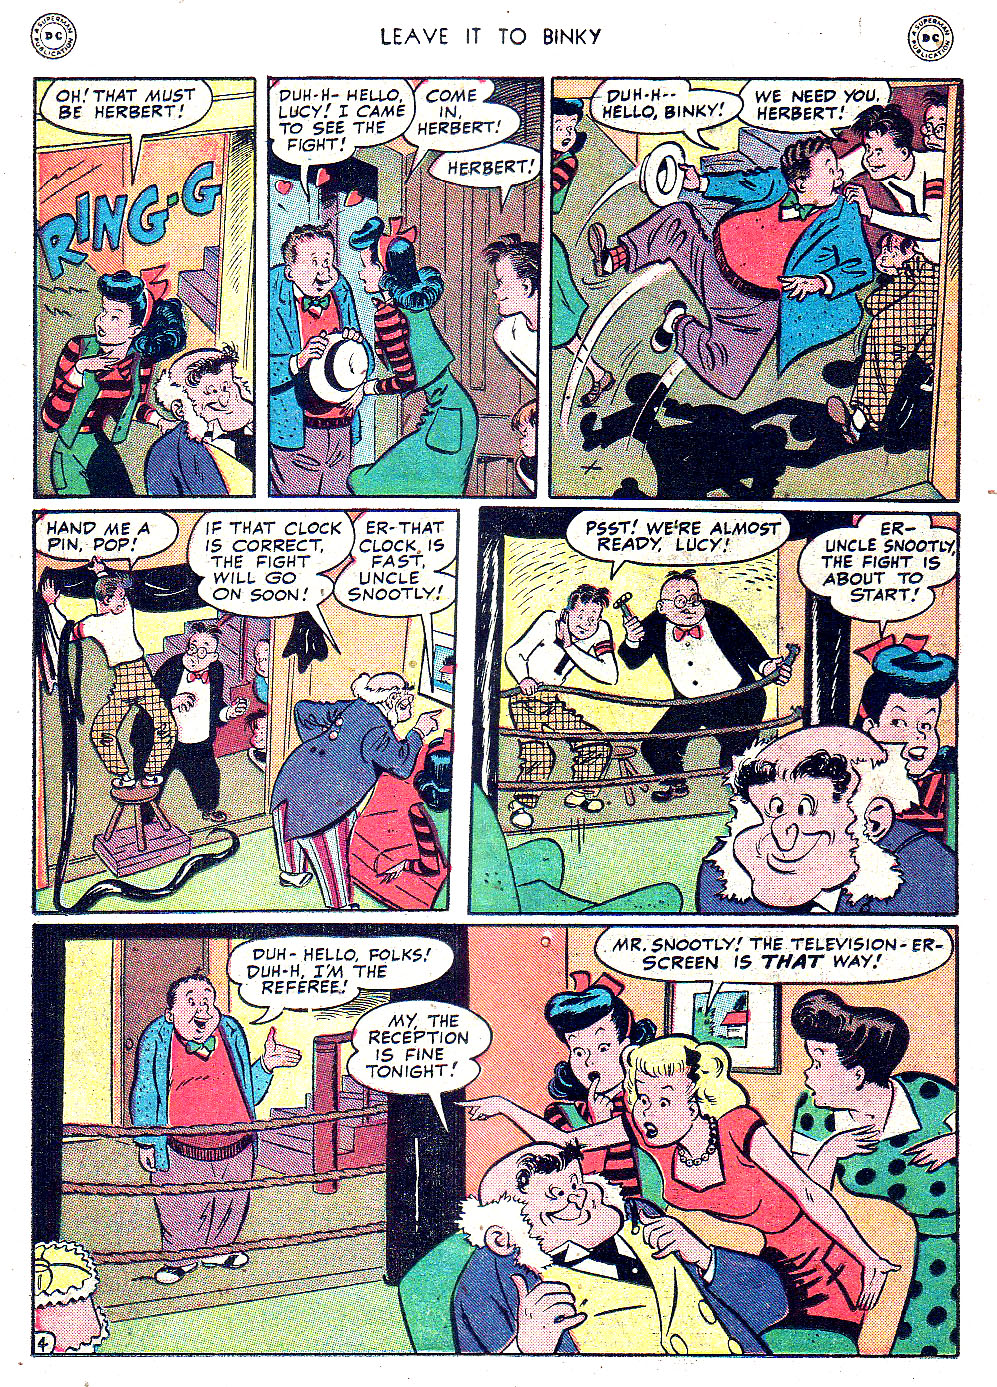 Read online Leave it to Binky comic -  Issue #4 - 24